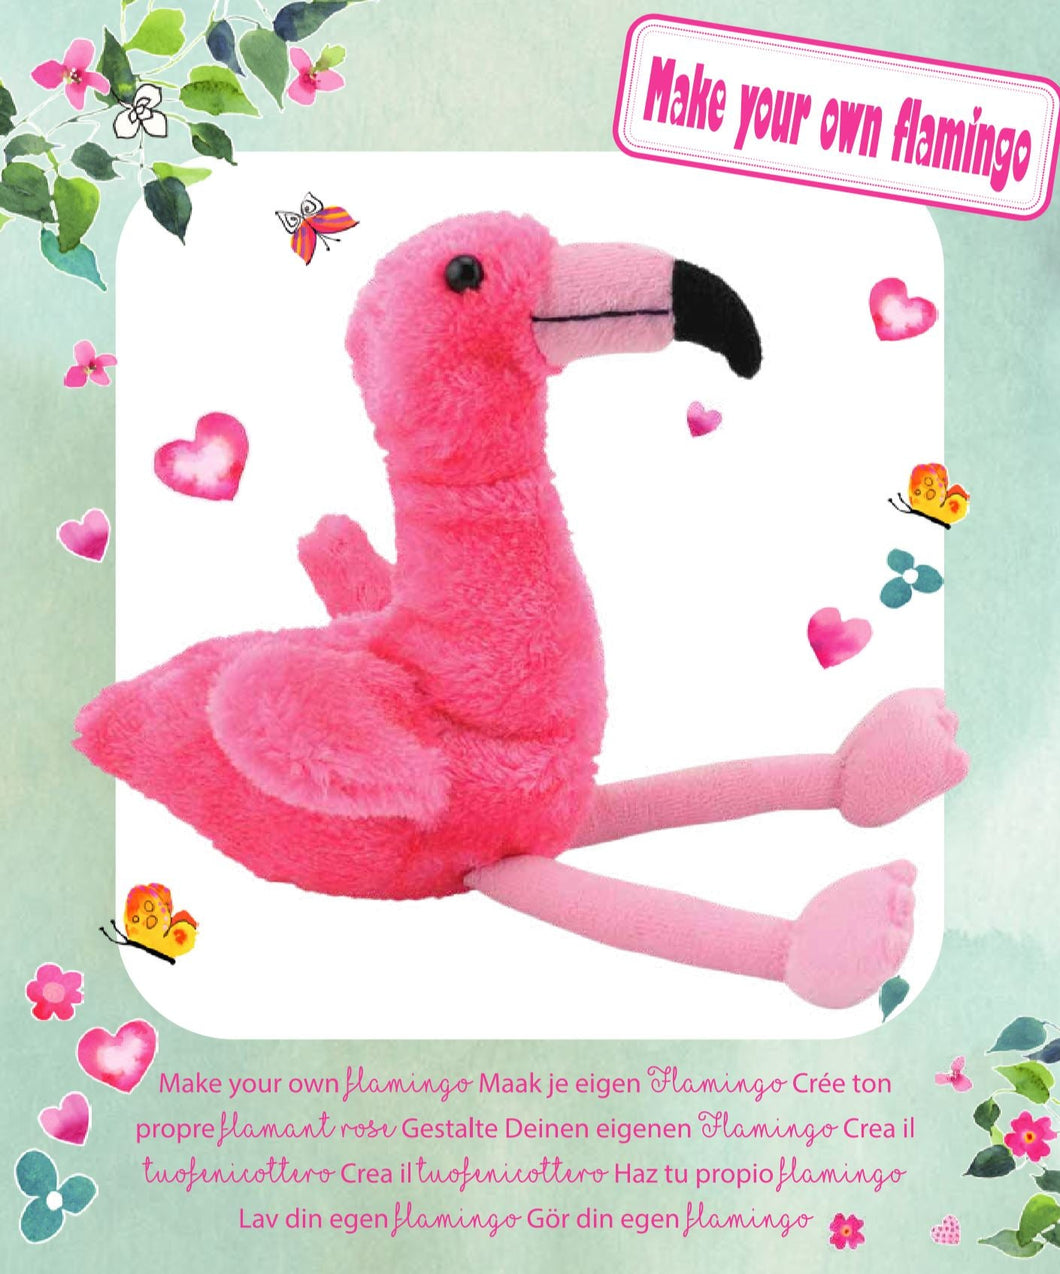 DIY Make Your Own Flamingo Kit